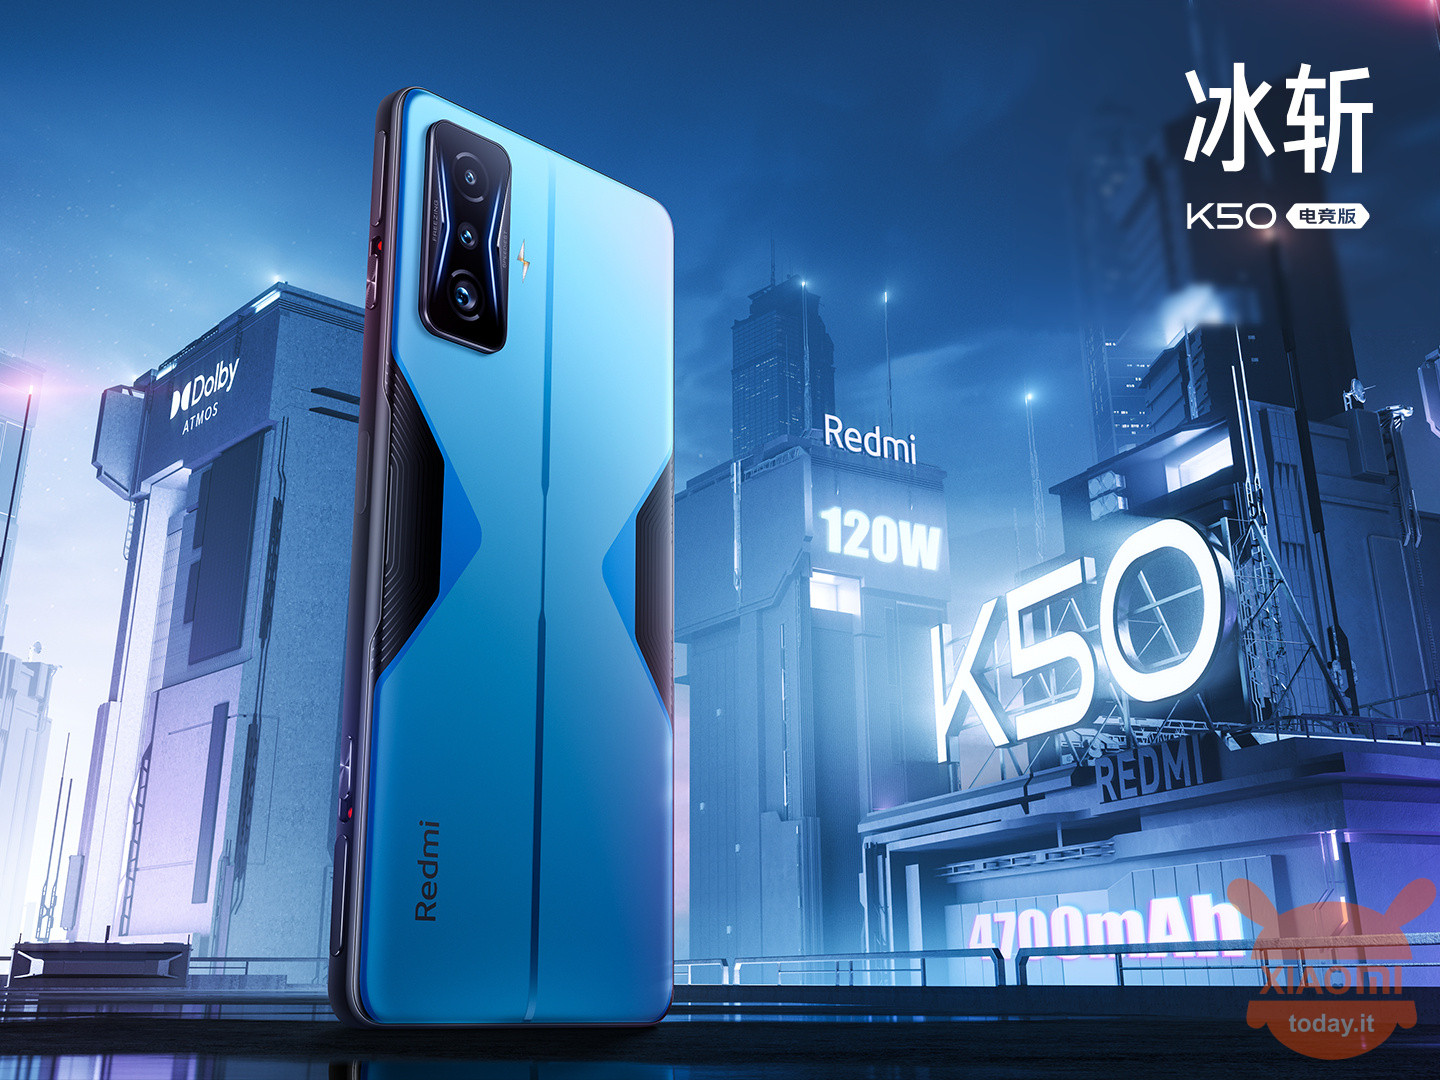 Redmi K50 Gaming Edition